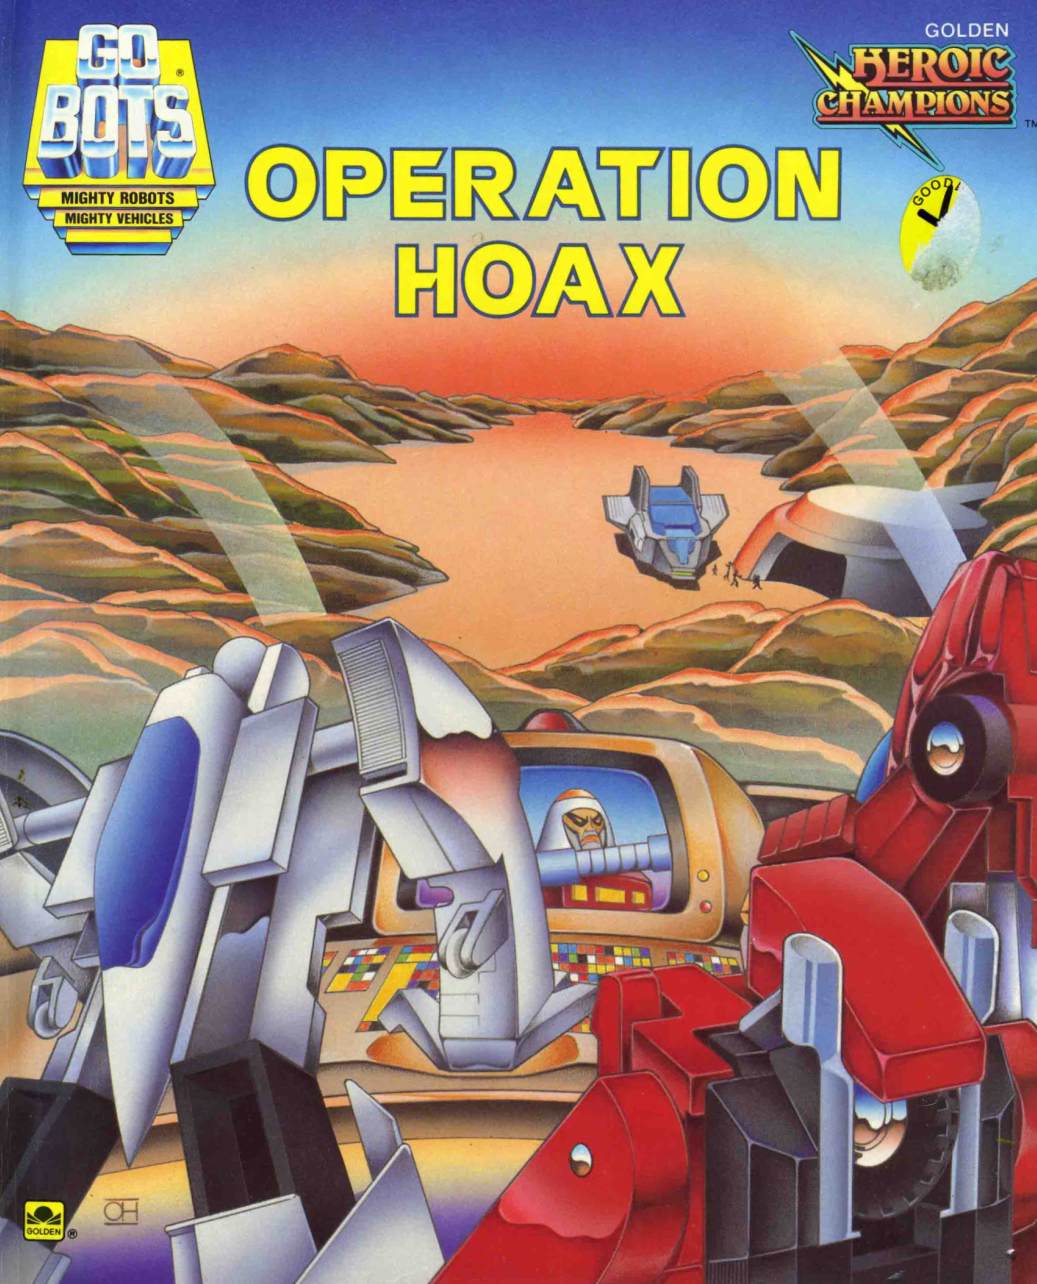 Operationhoax-cover.jpg